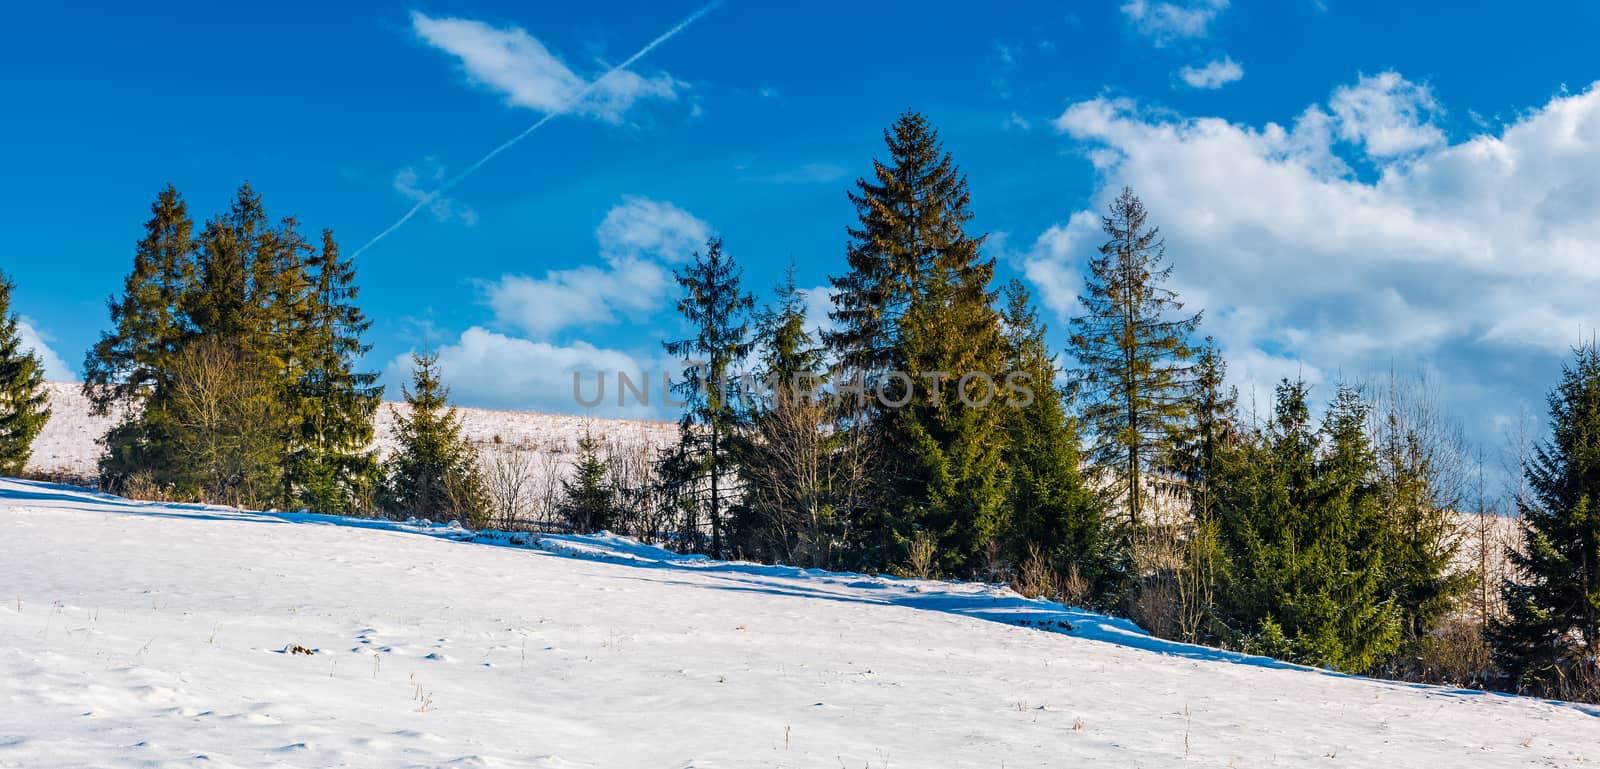 row of spruce trees on a snowy hillside by Pellinni